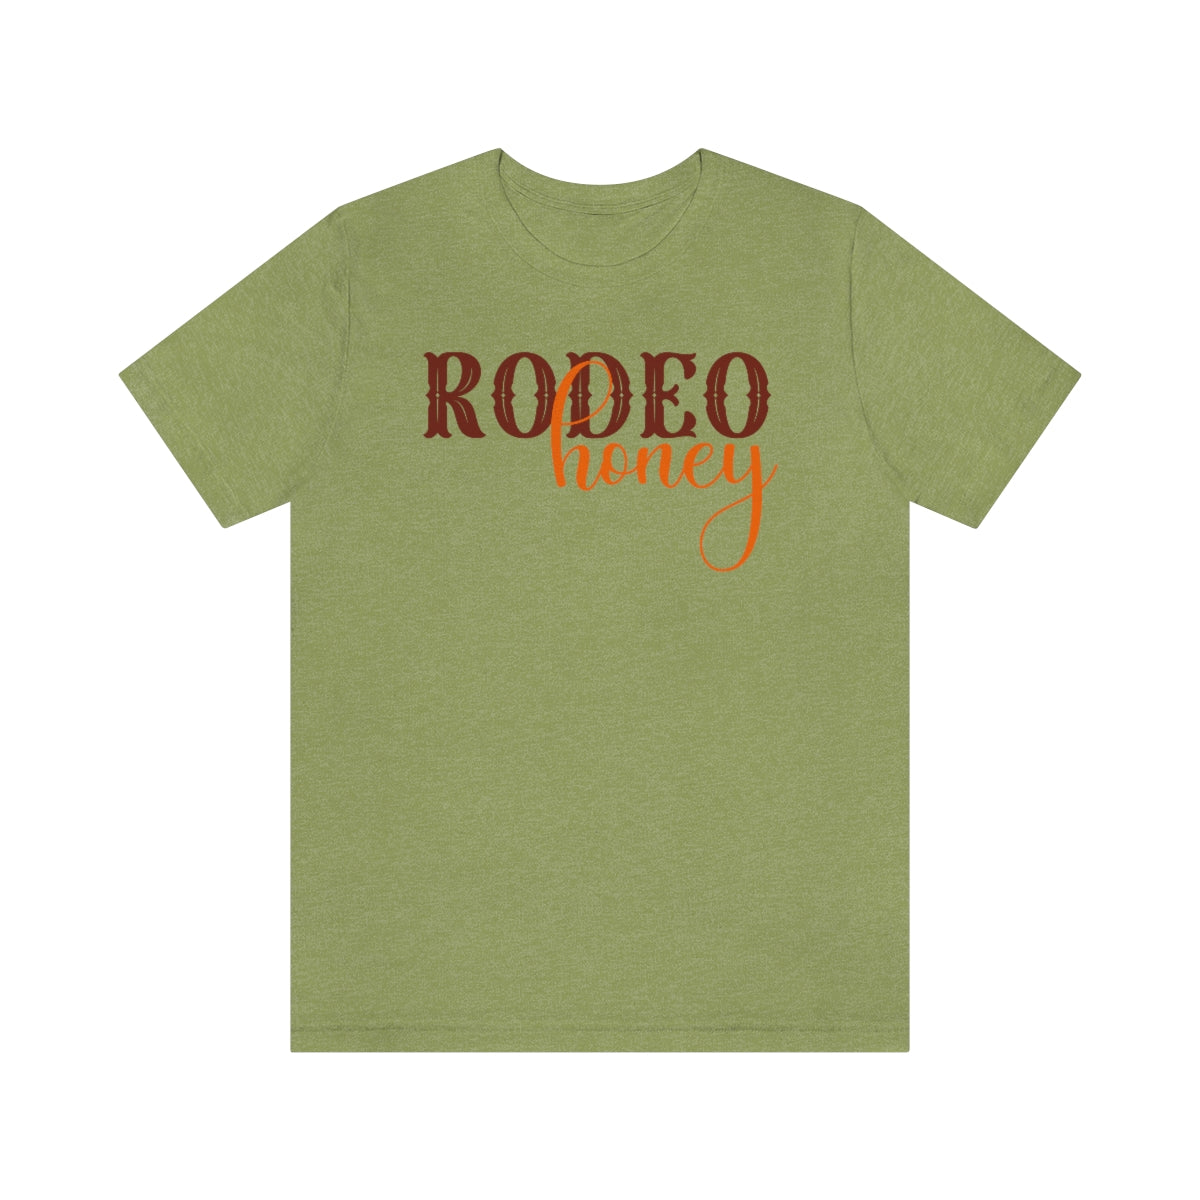 Rodeo Honey, Western Rodeo Shirt for Women